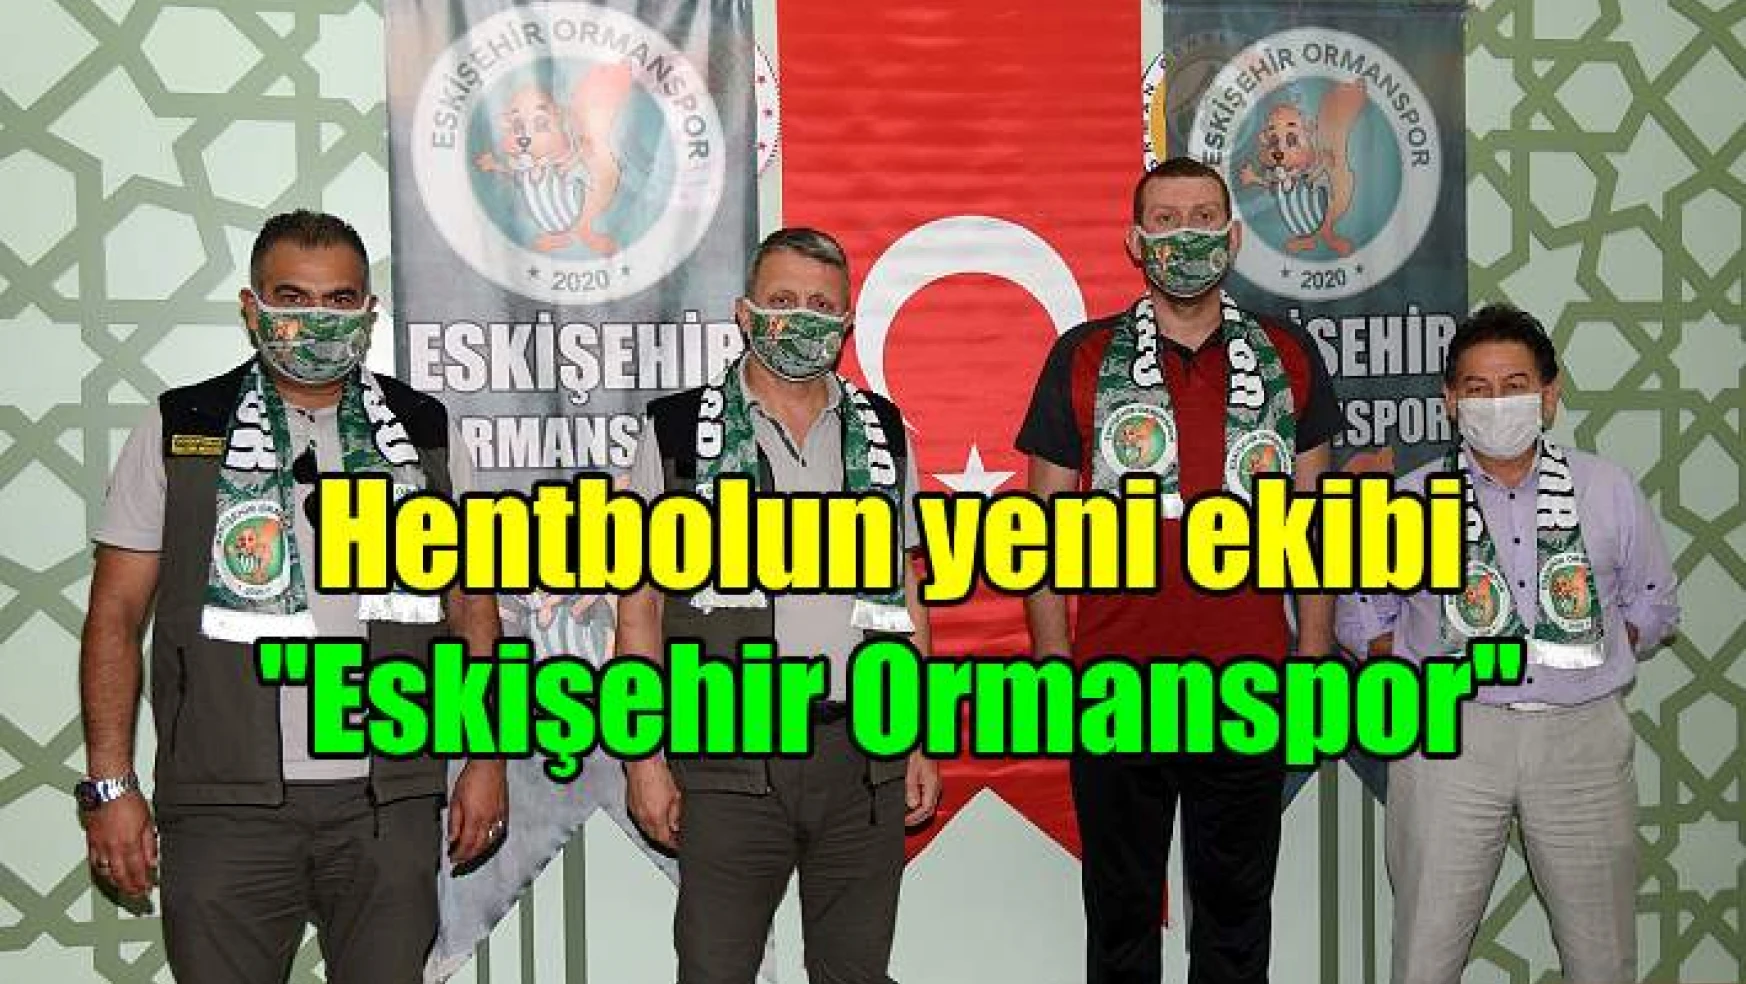 Eskişehir Ormanspor, Hentbola “Merhaba” dedi